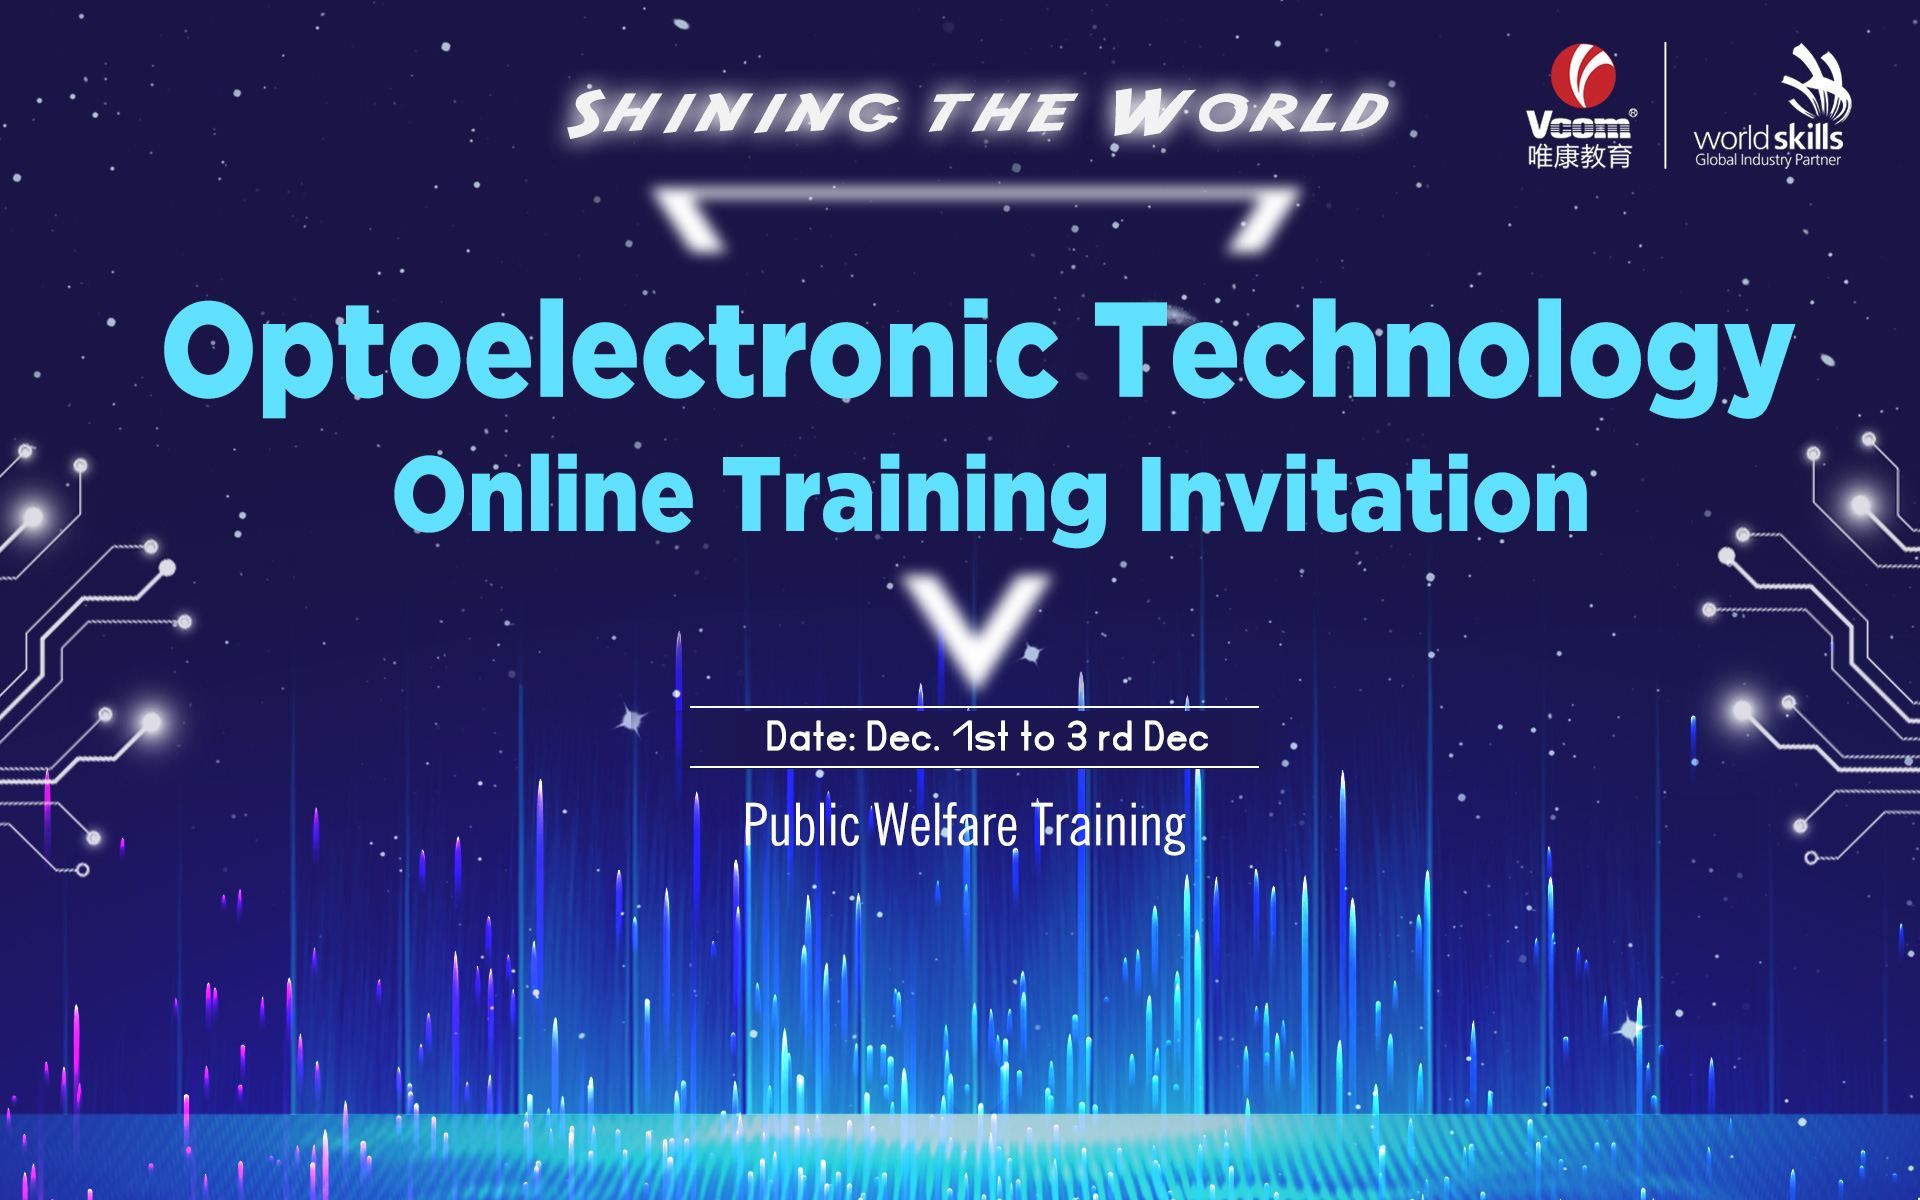 VCOM International Skills Online Training Center Launched on 1st Dec